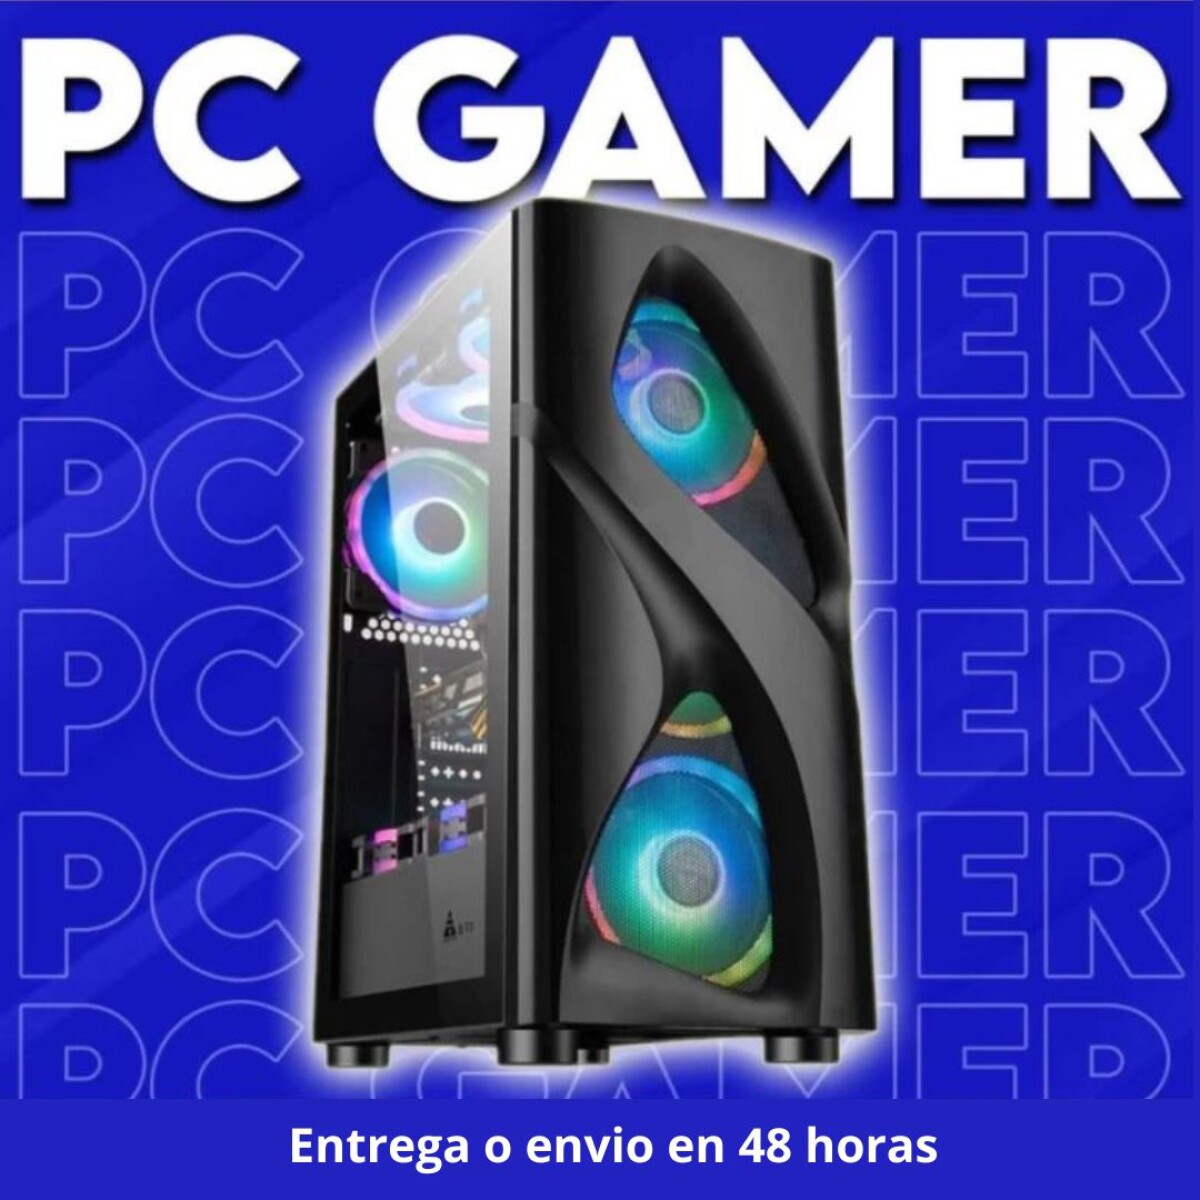 PC GAMER – NIVEL ALLSTAR 